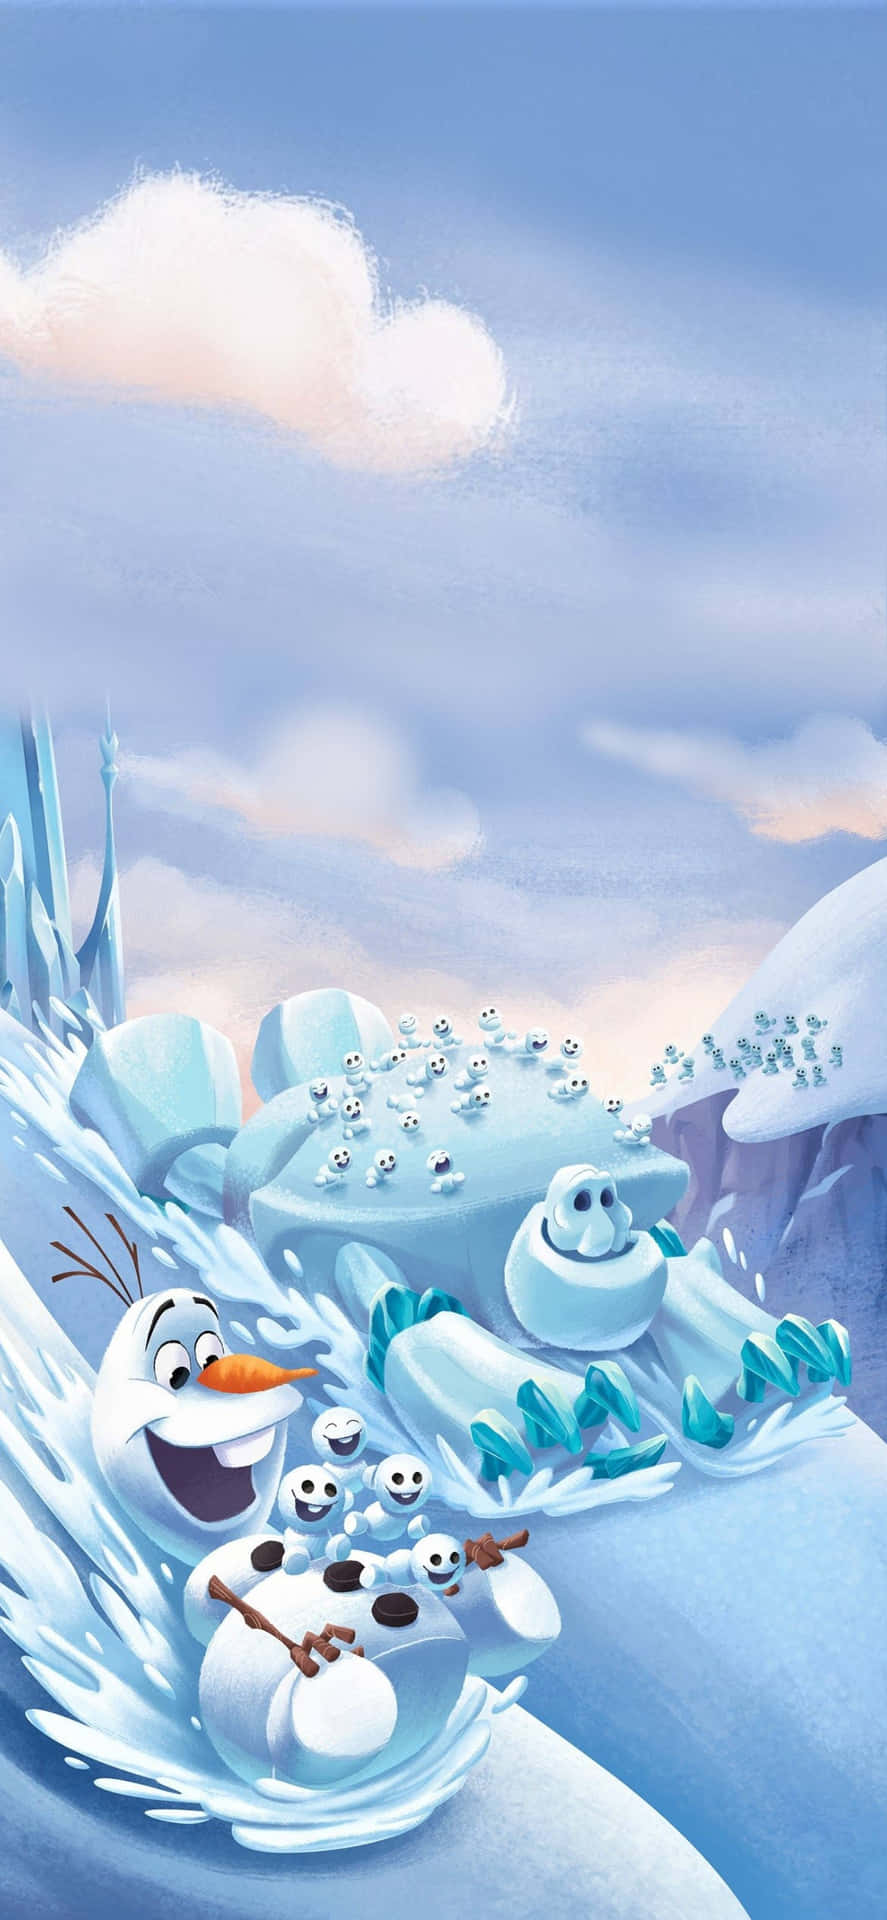 Olaf, everyone's favorite snowman